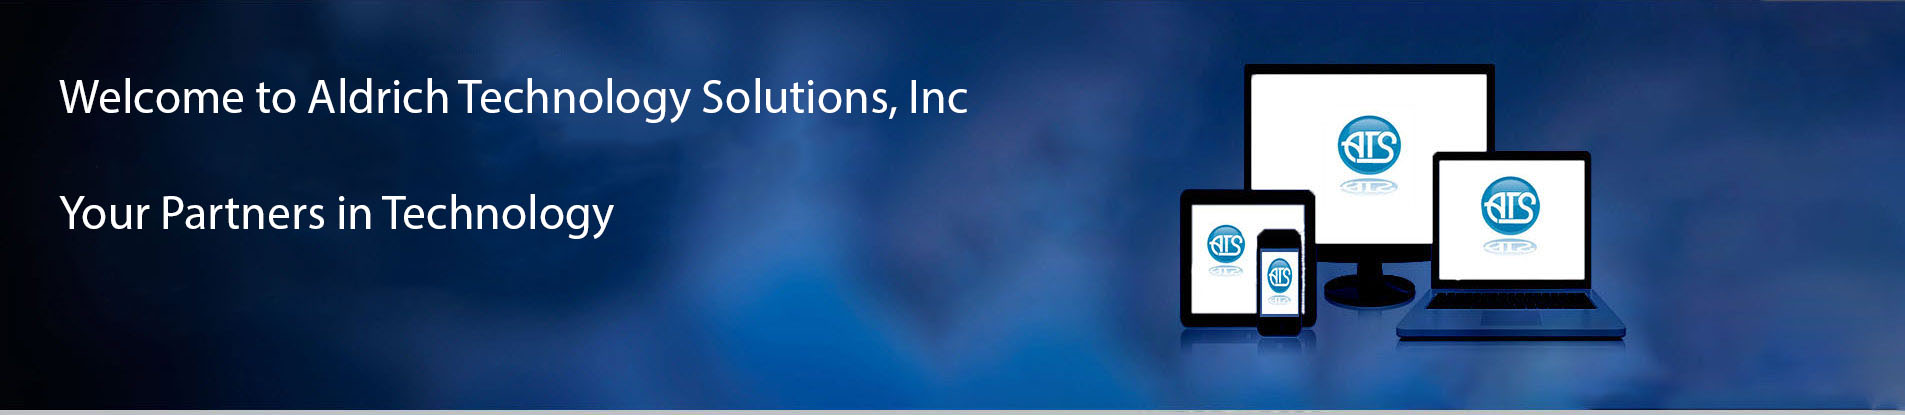 Aldrich Technology Solutions, Inc